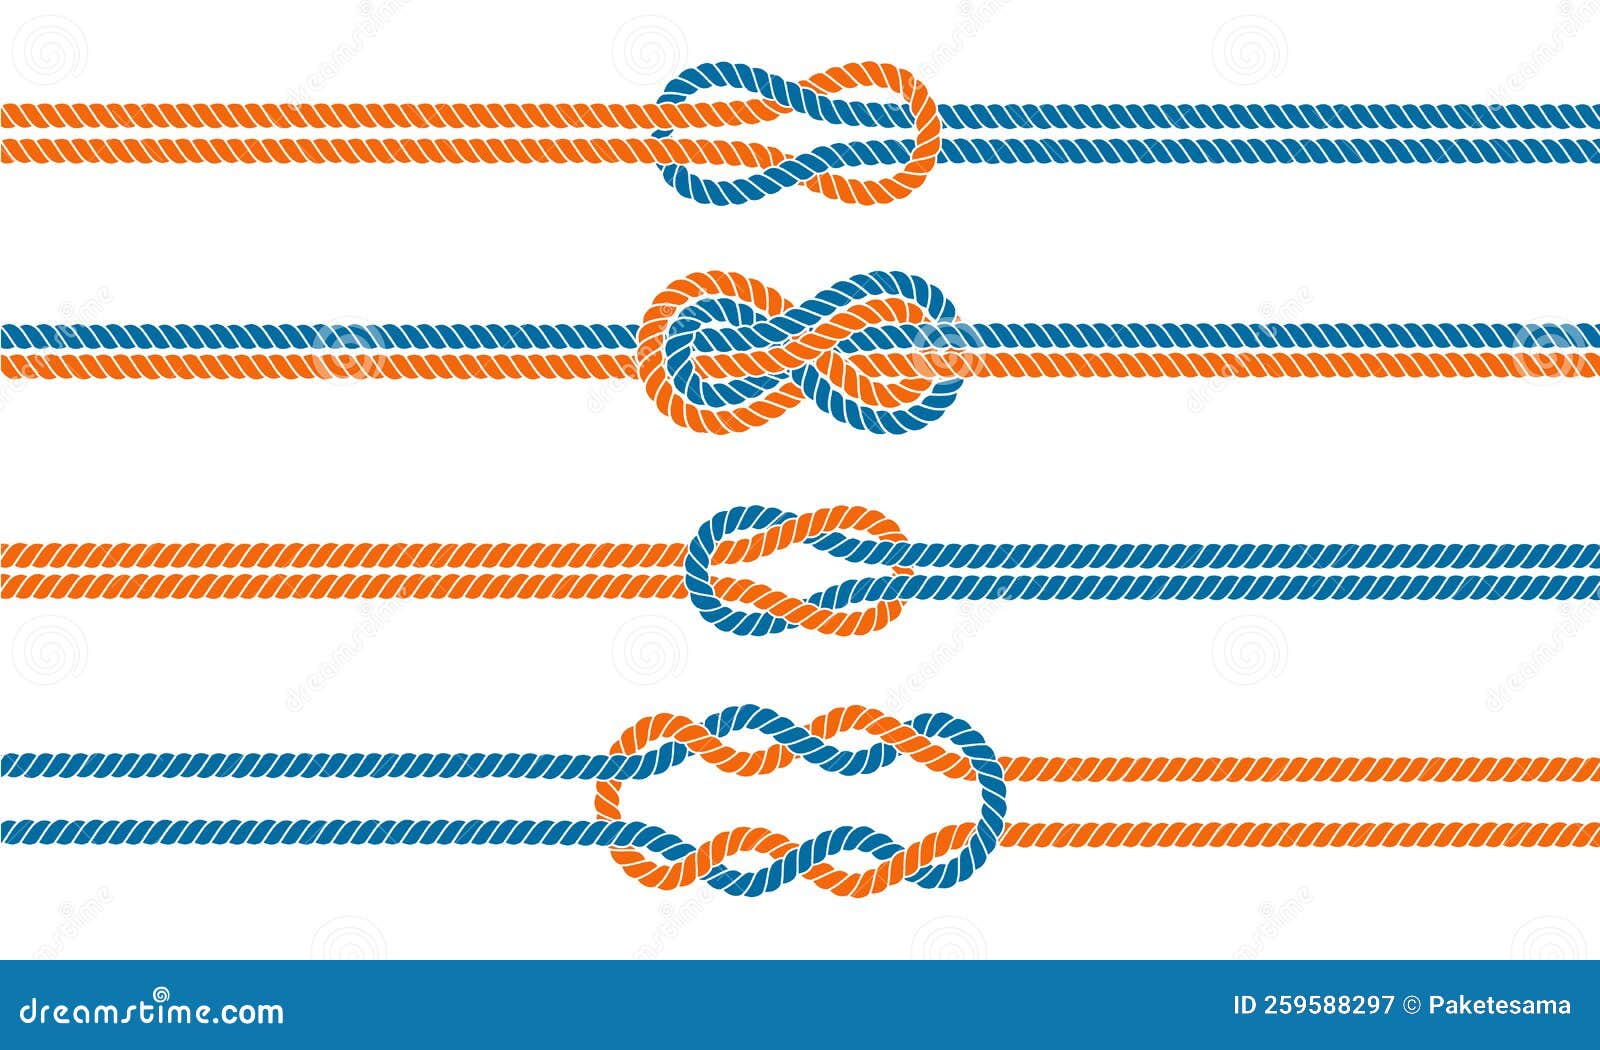 Sailor knot dividers set stock vector. Illustration of border - 259588297